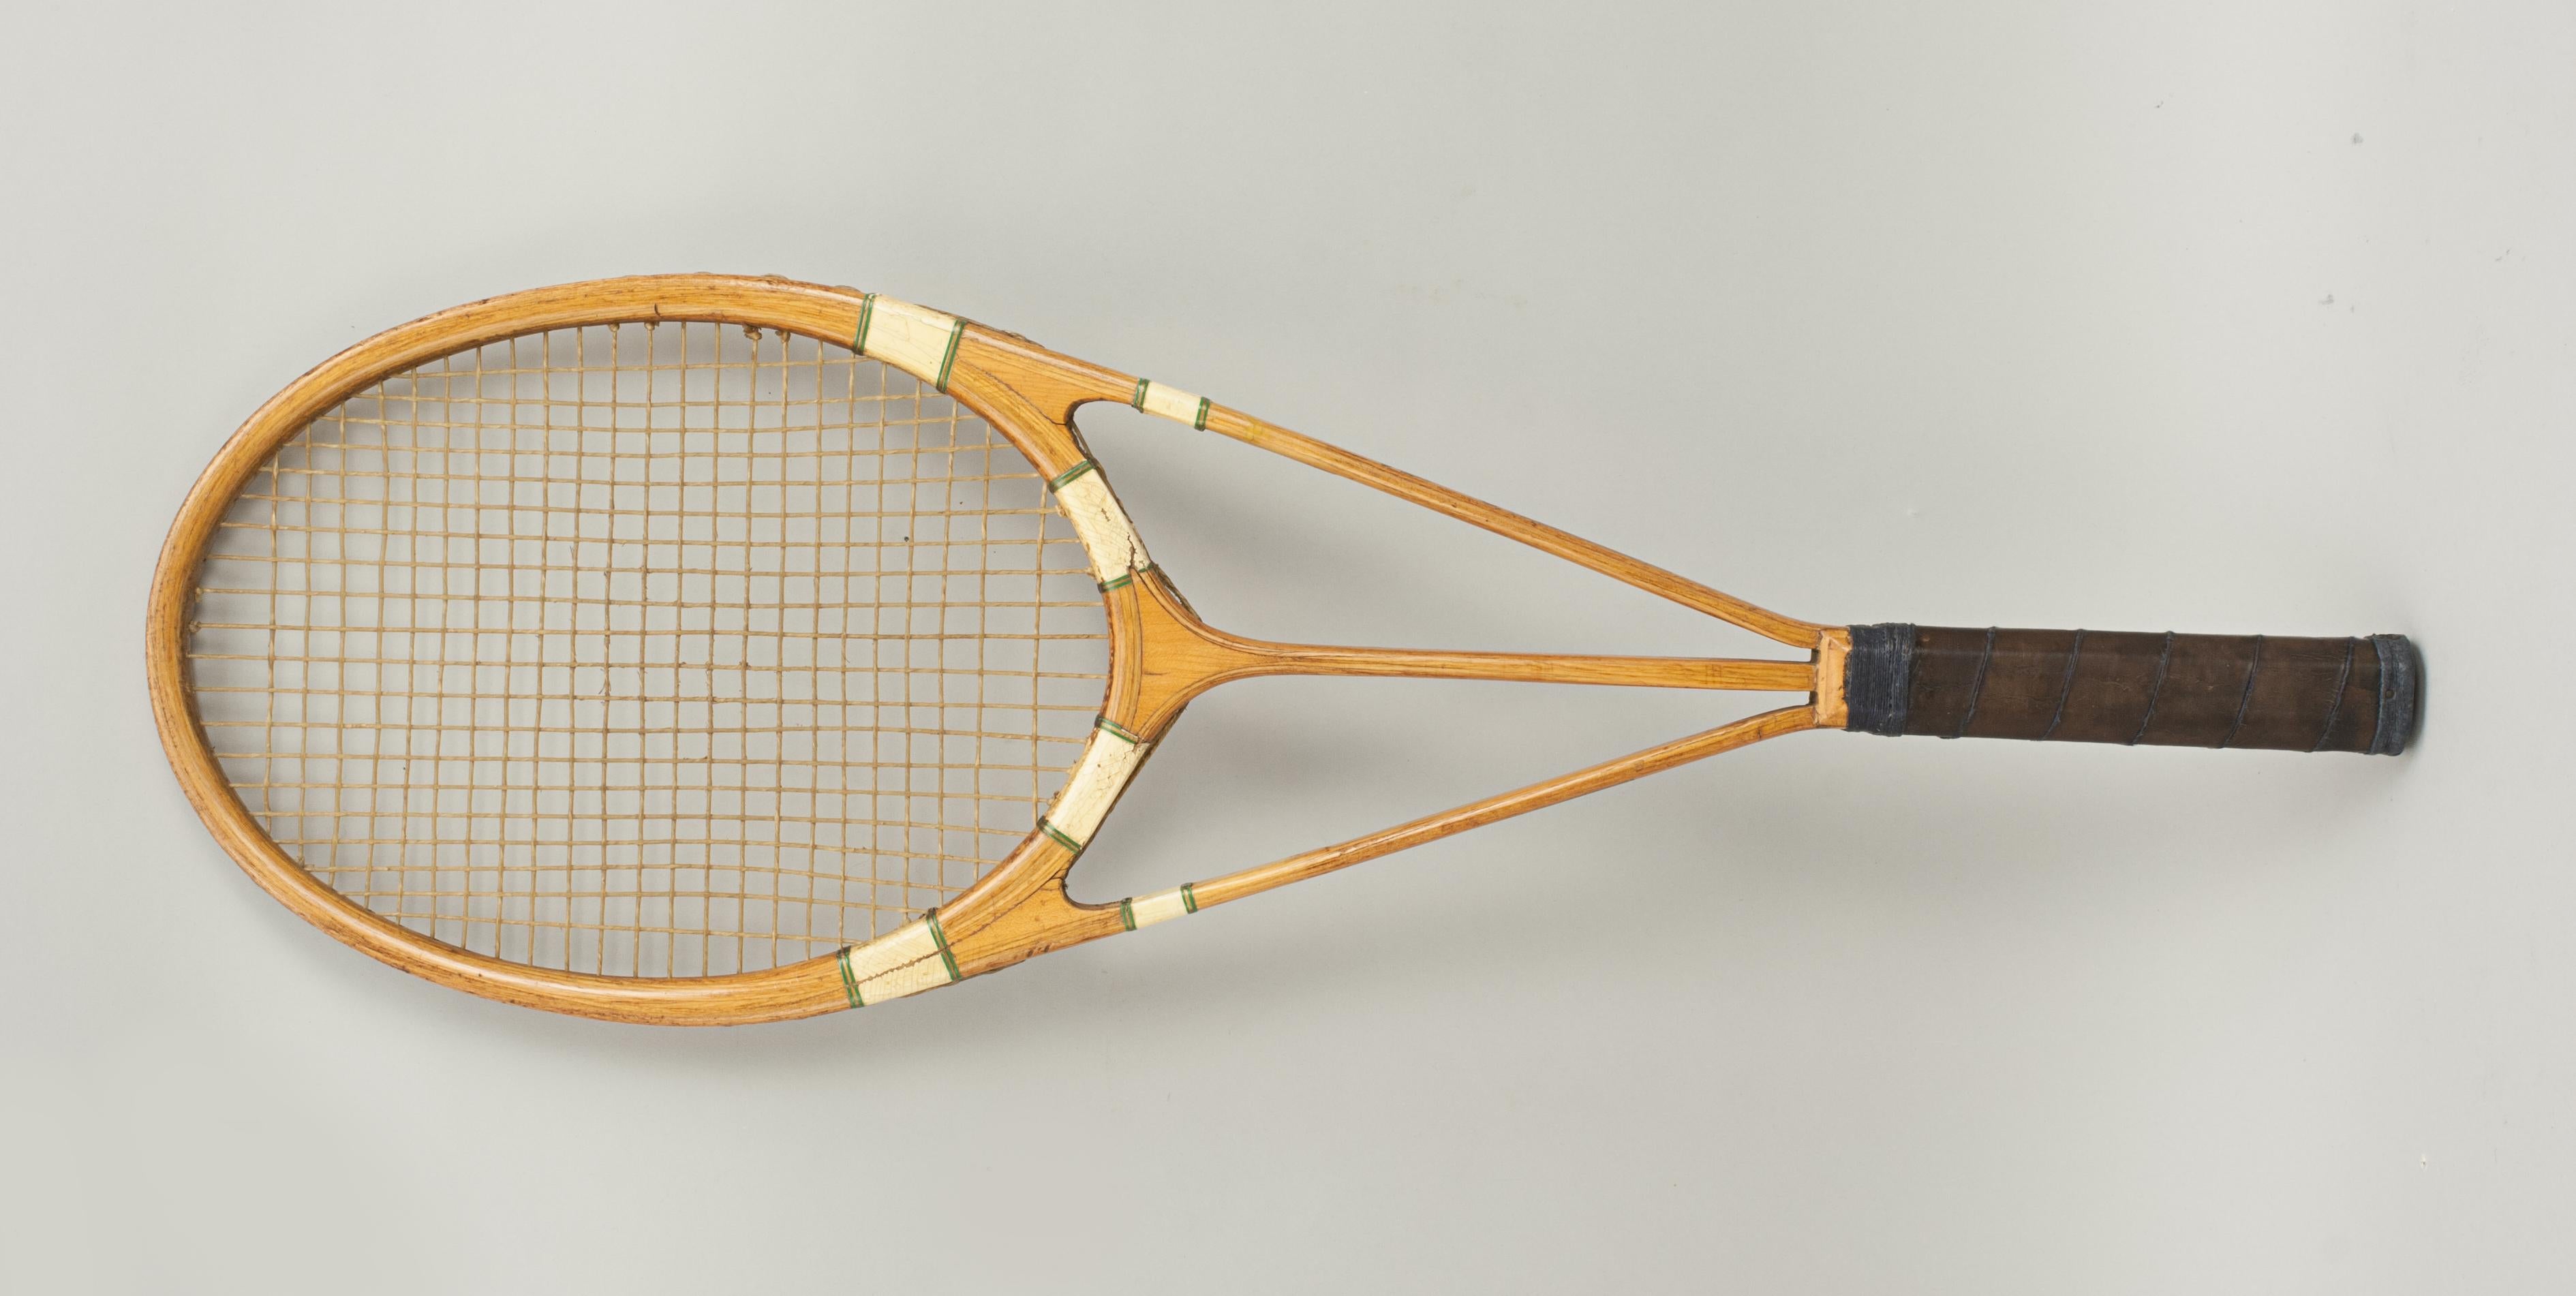 hazell's streamline tennis racket